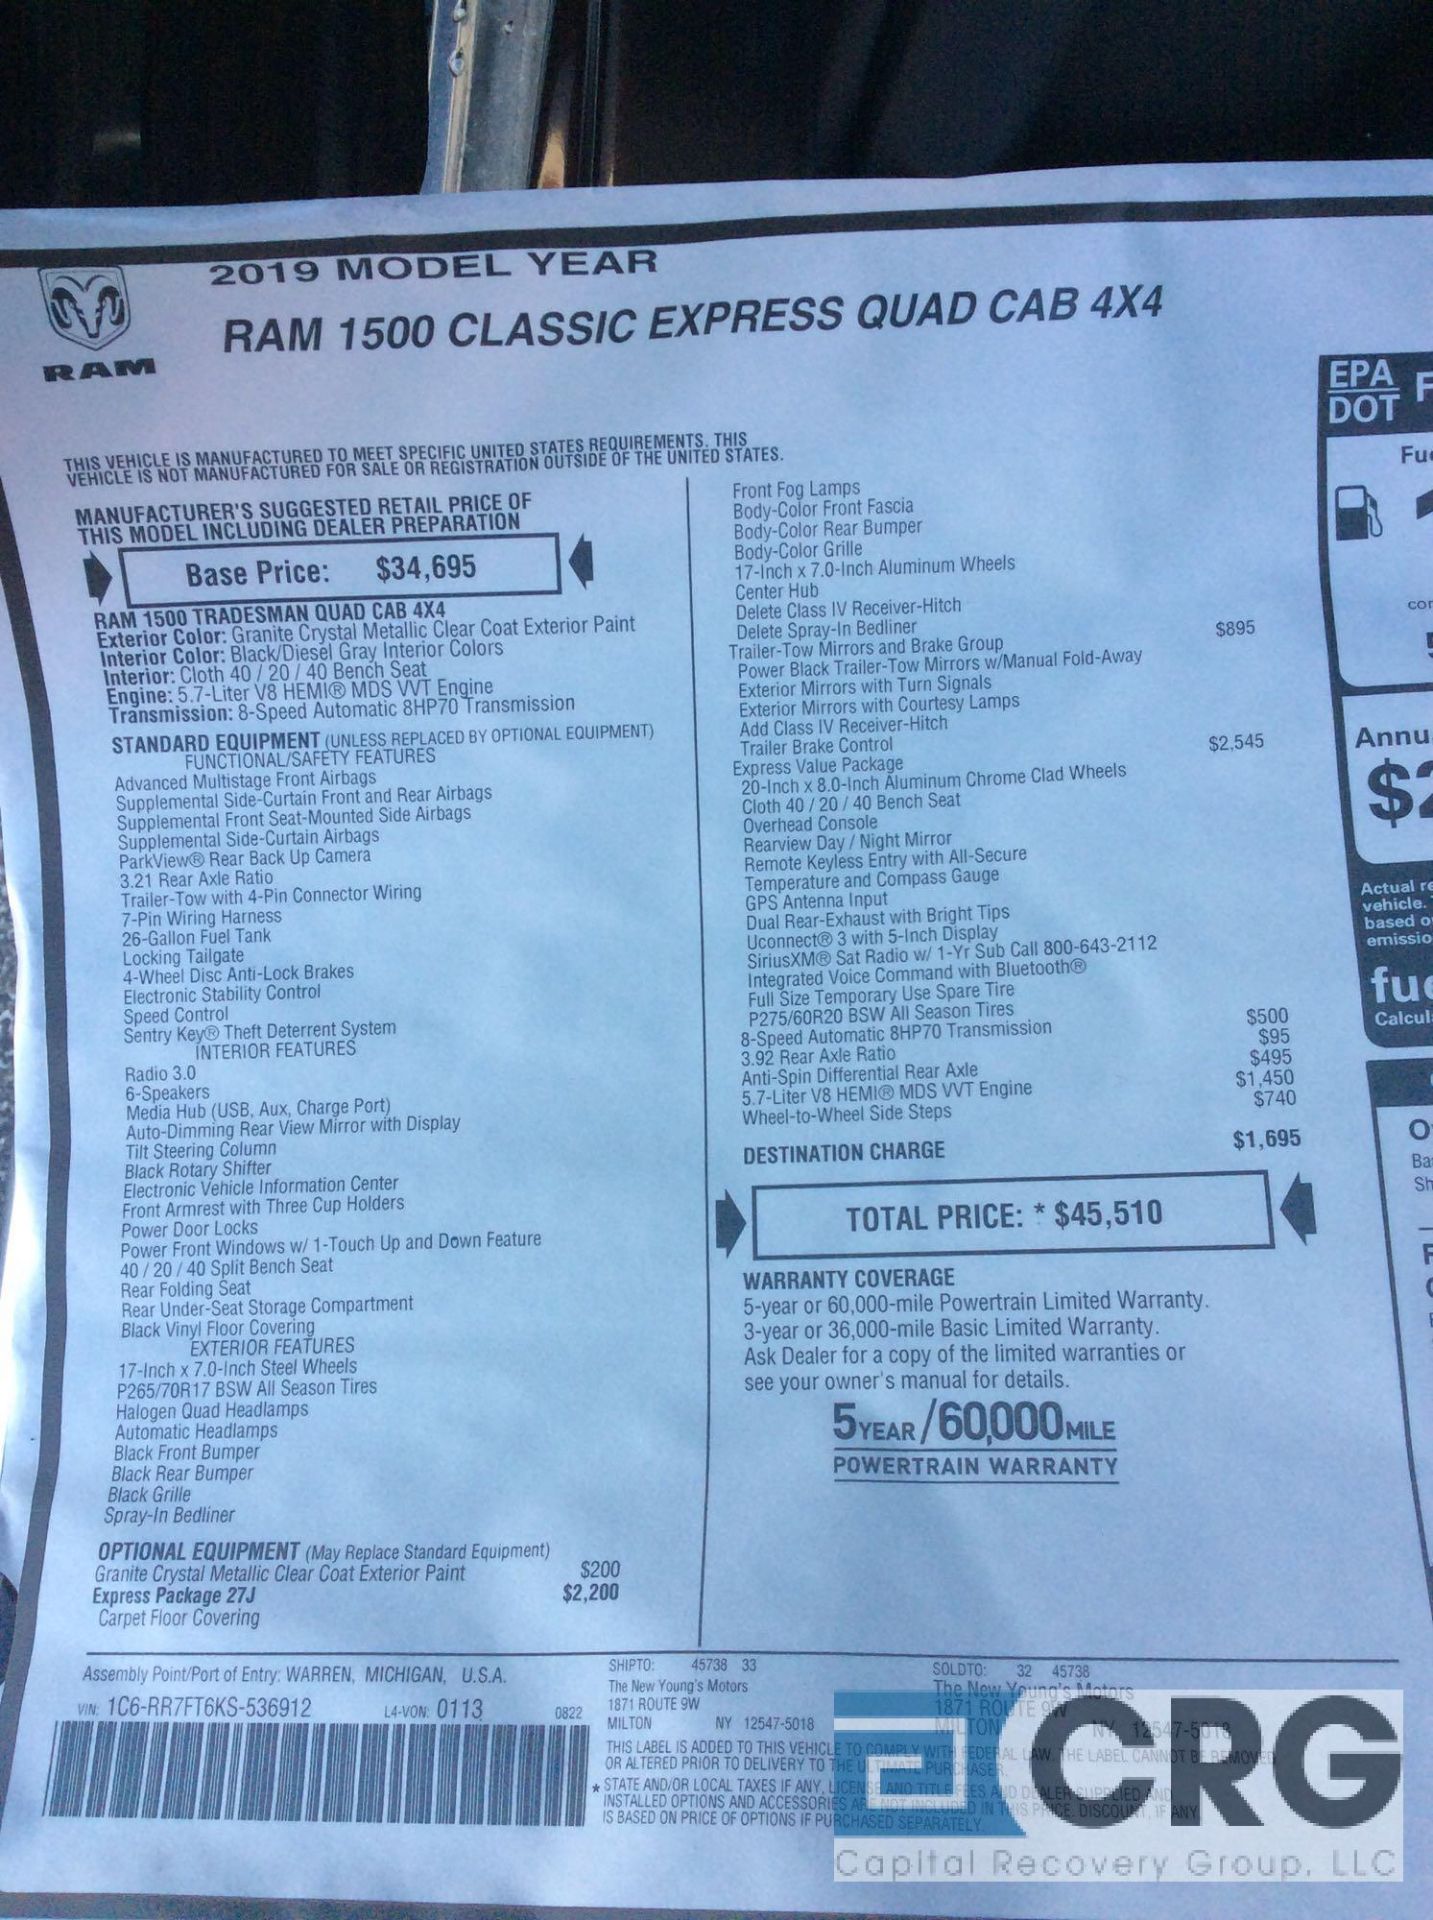 2019 Ram 1500 CLASSIC EXPRESS QUAD CAB 4X4, AT, 5.7 liter HEMI V-8 engine, back up camera, trailer - Image 10 of 11